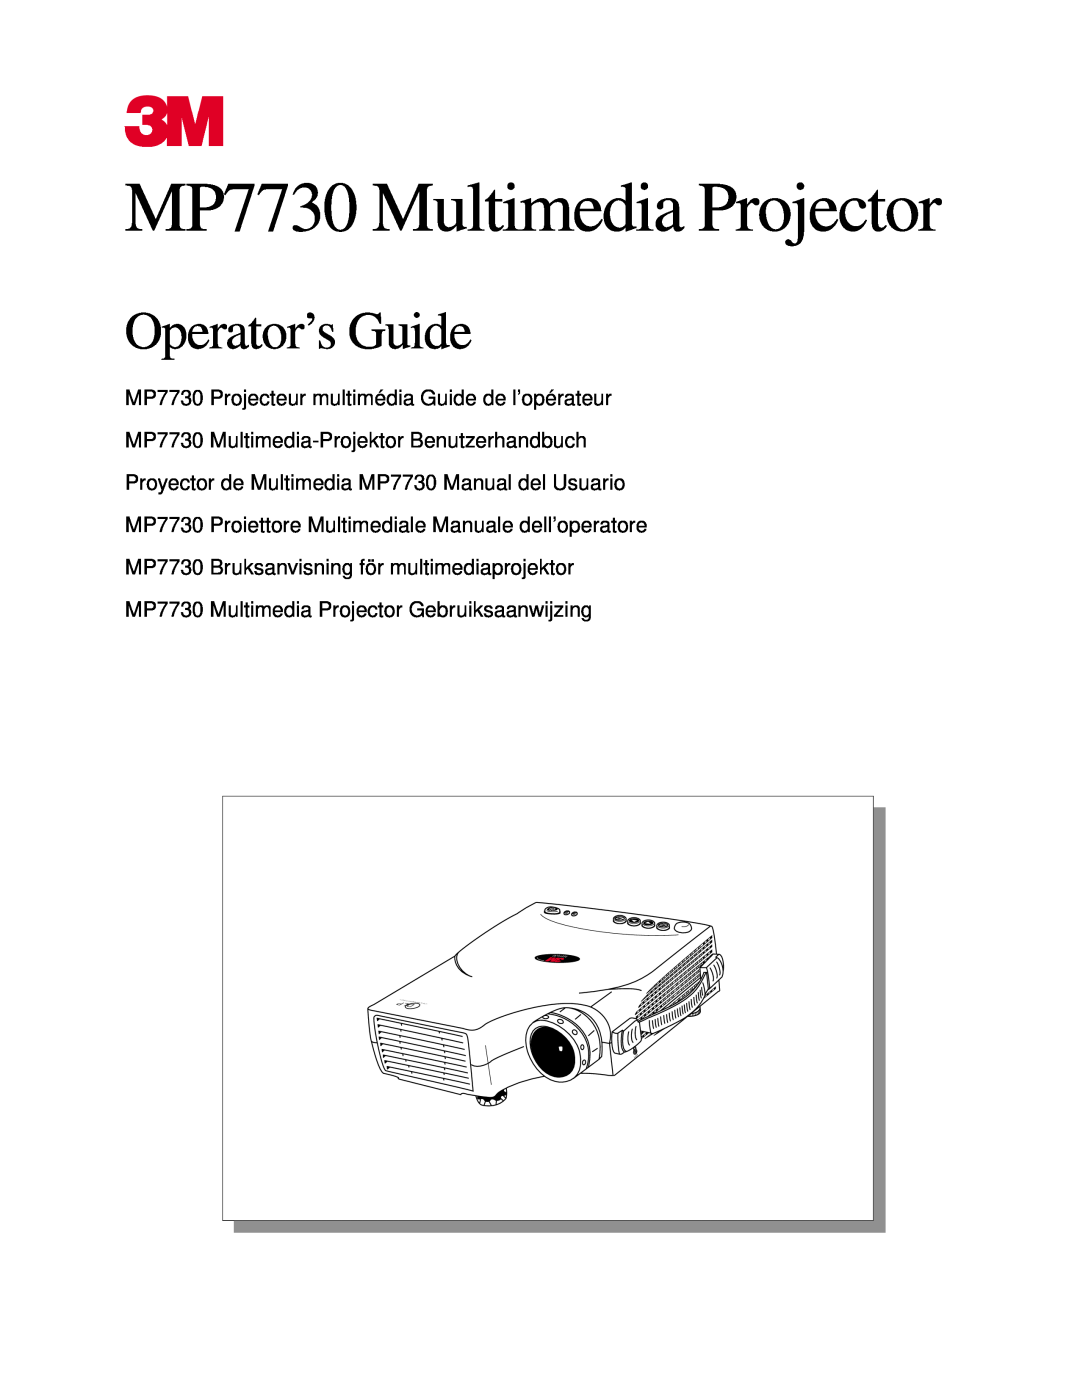 Apple manual MP7730 Projecteur multimédia Guide de l’opérateur, MP7730 Multimedia-Projektor Benutzerhandbuch, Pl D 